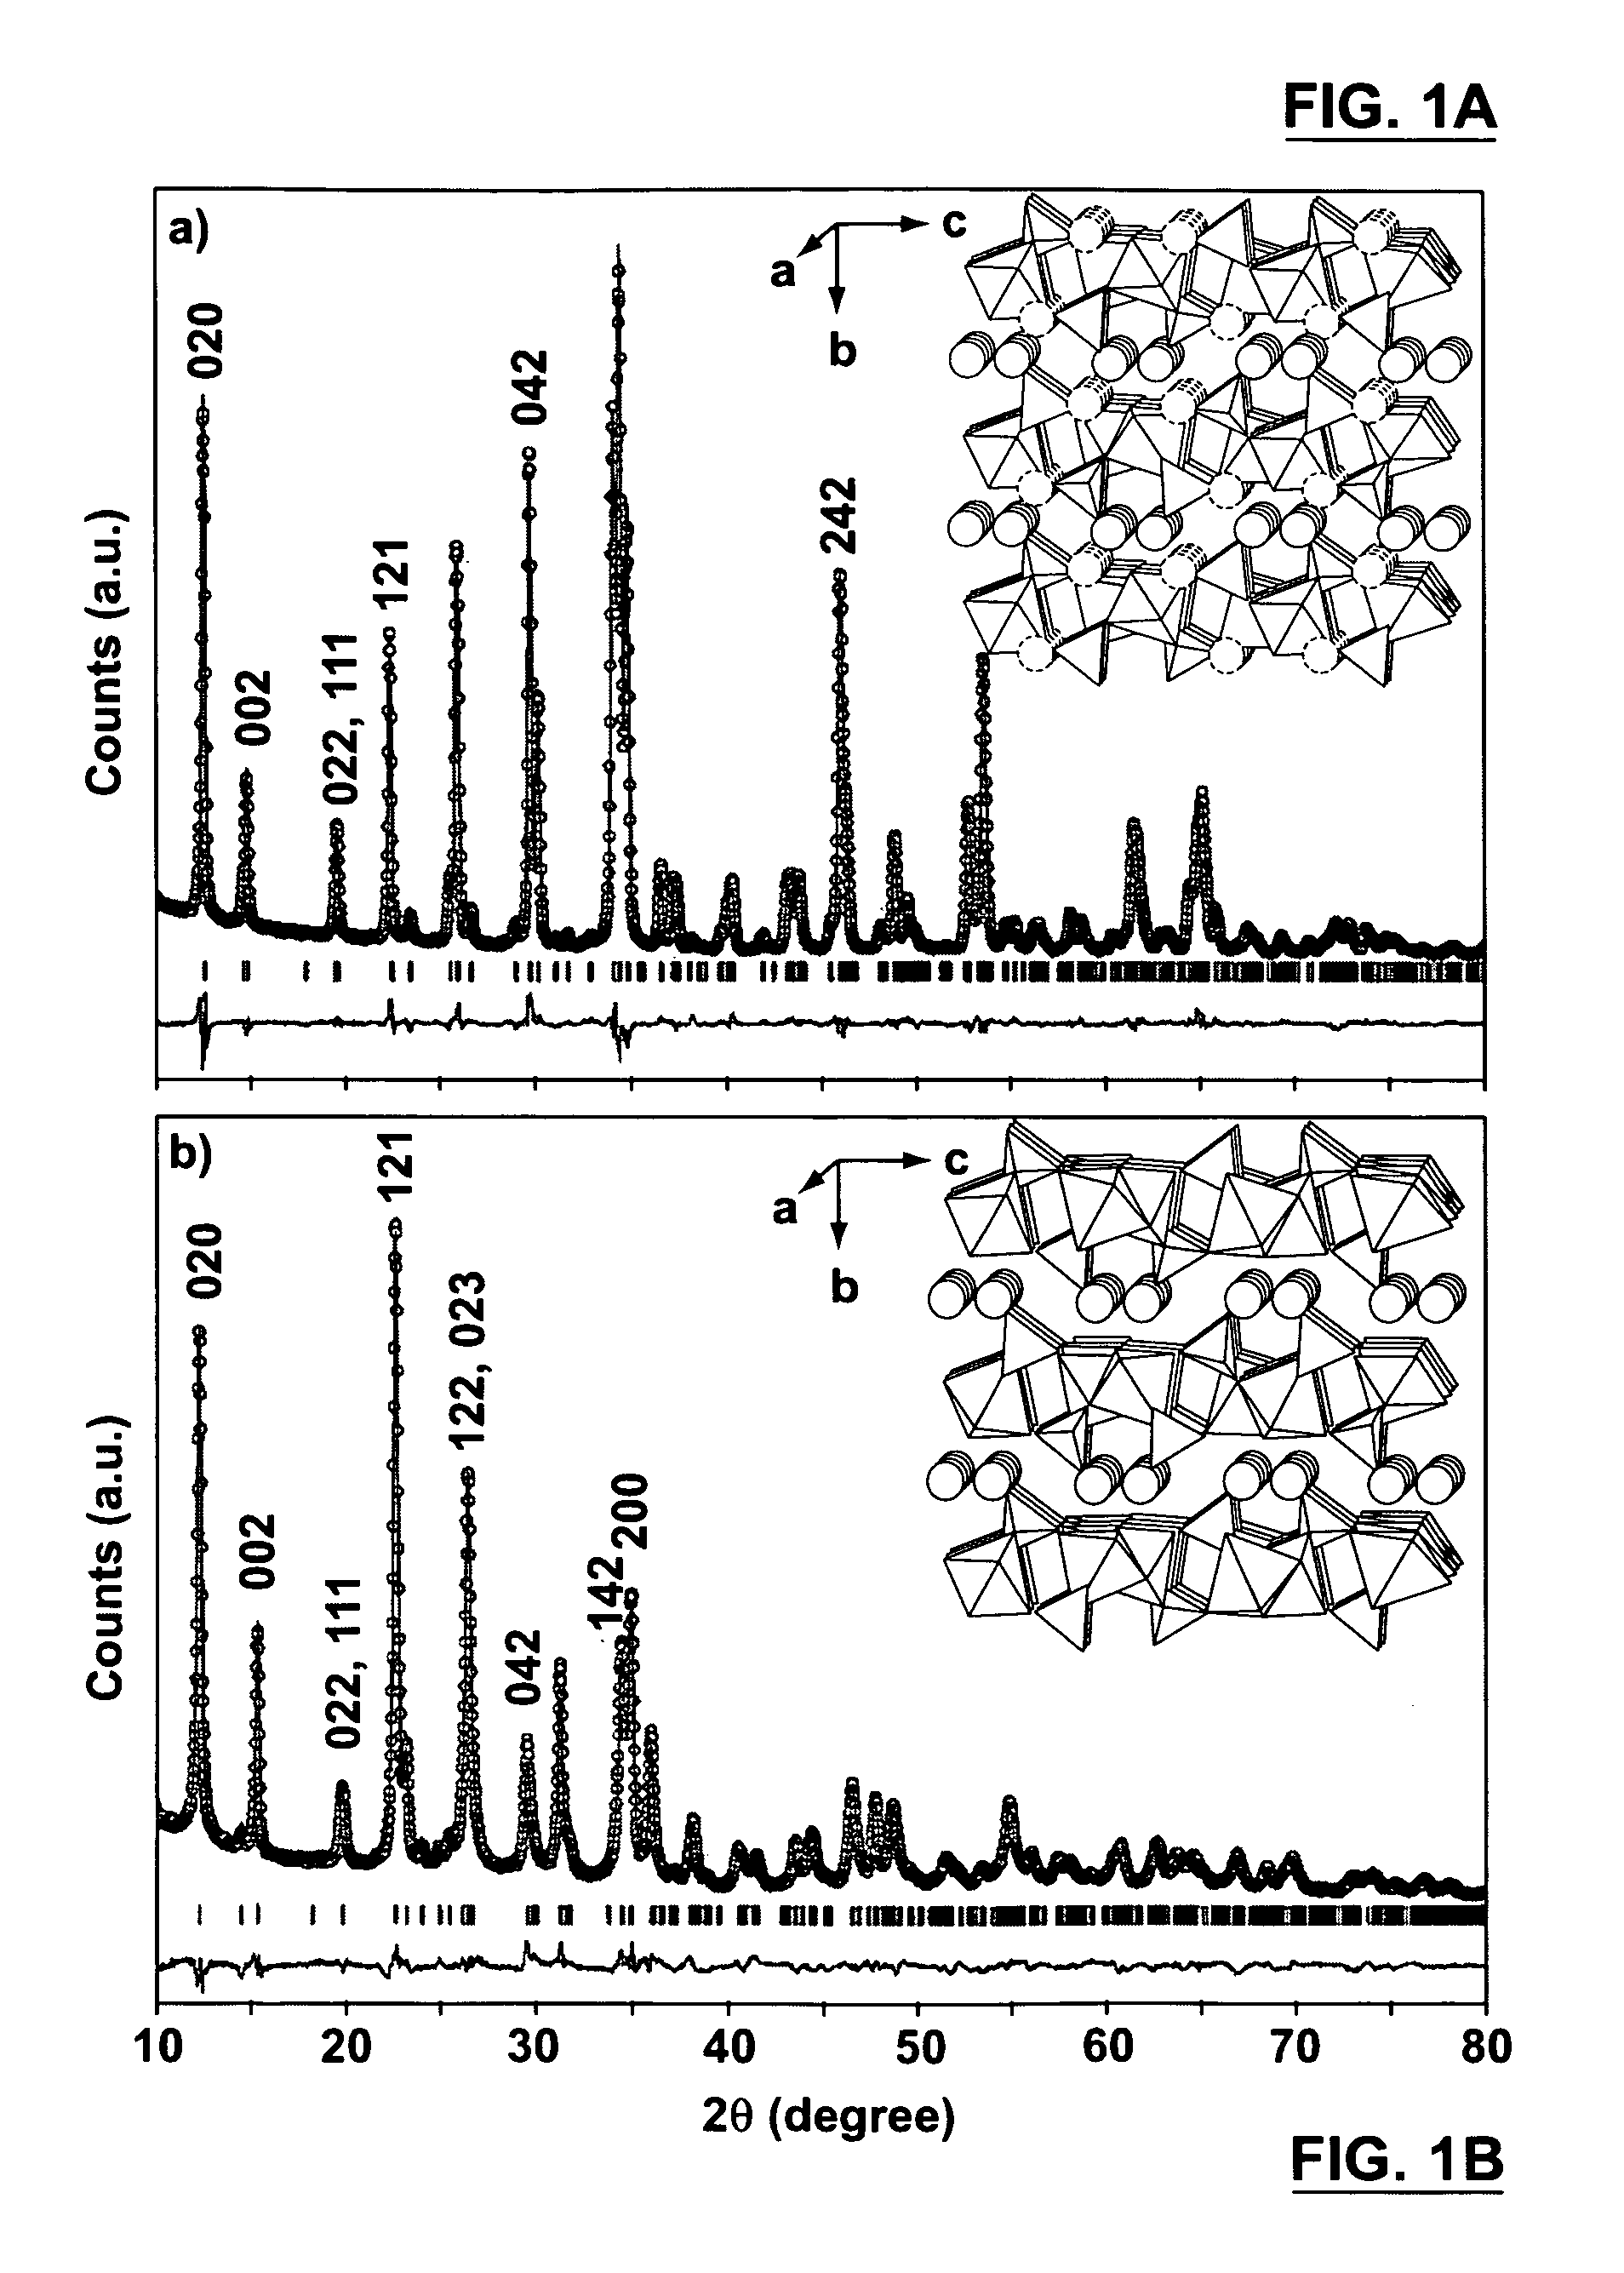 Mixed Lithium/Sodium Ion Iron Fluorophosphate Cathodes for Lithium Ion Batteries